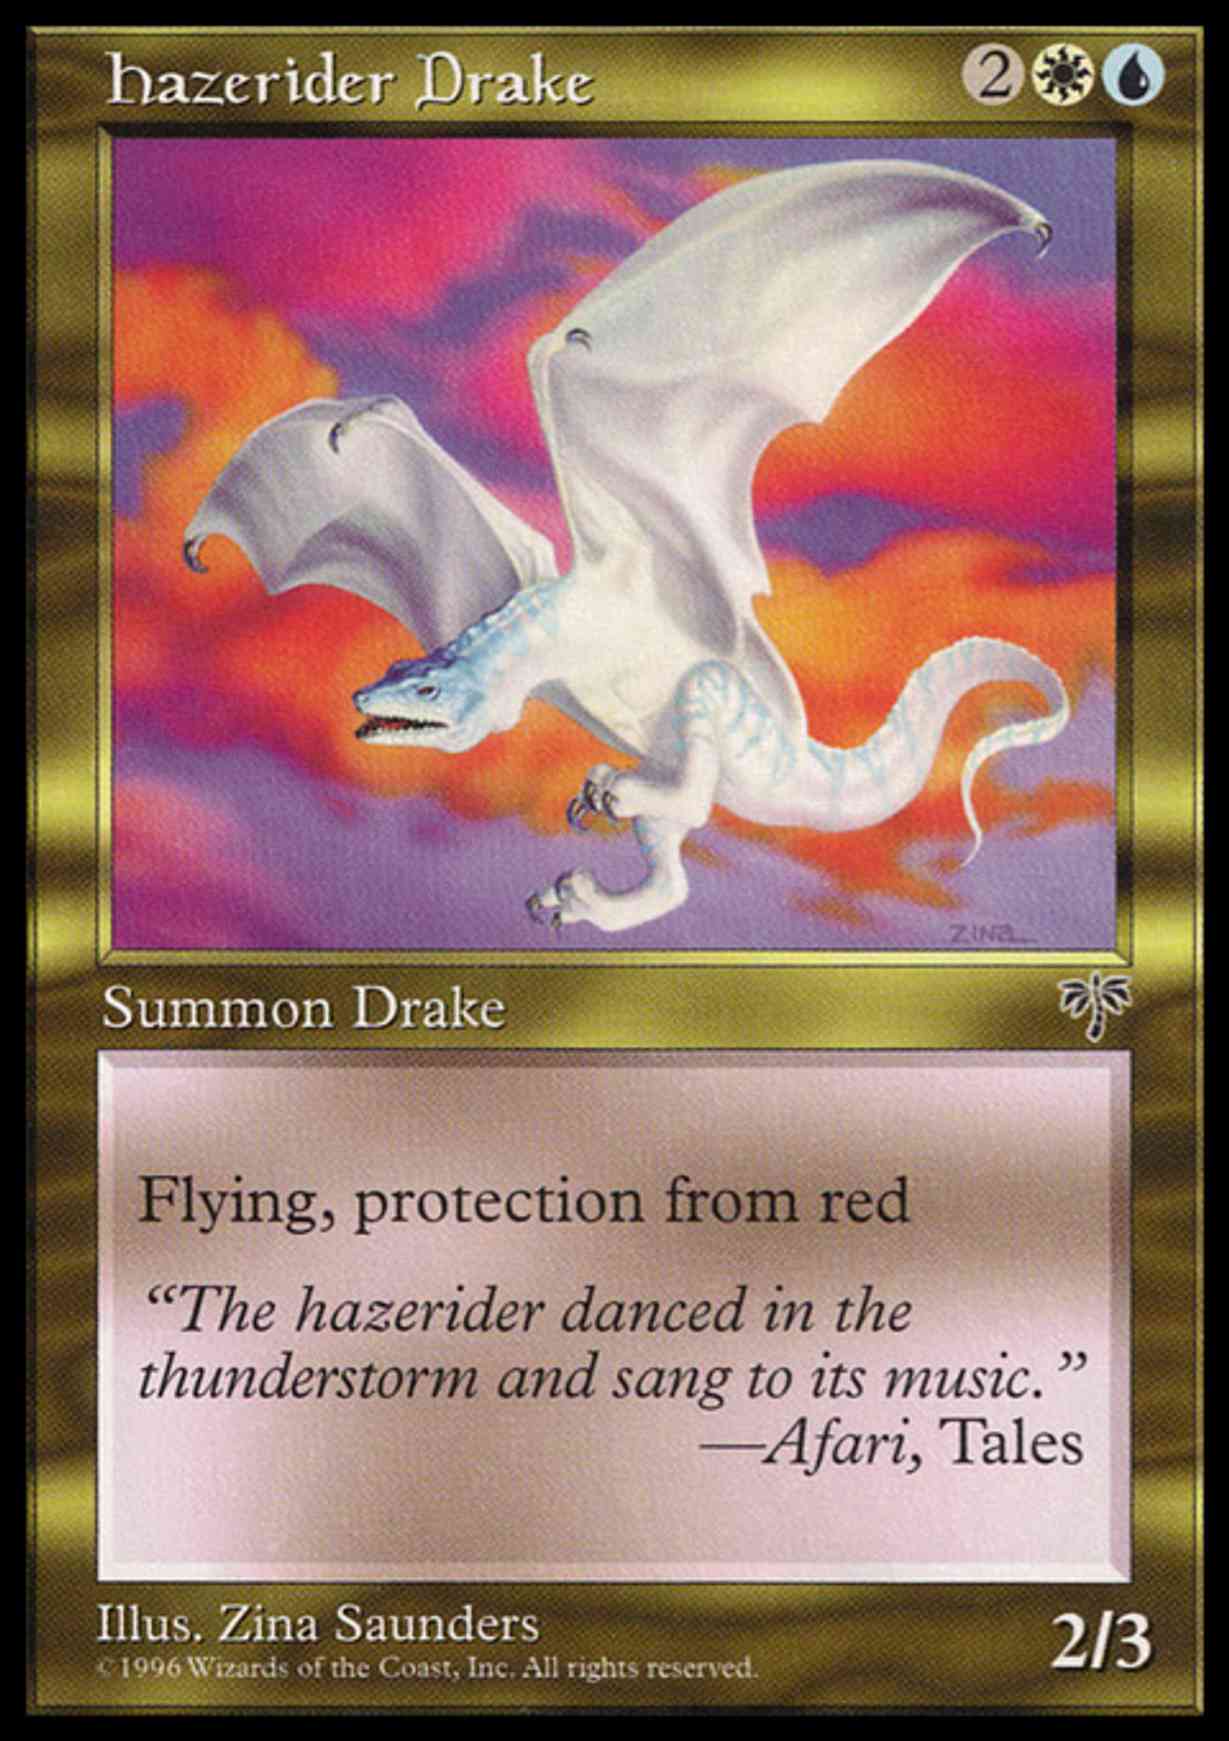 Hazerider Drake magic card front